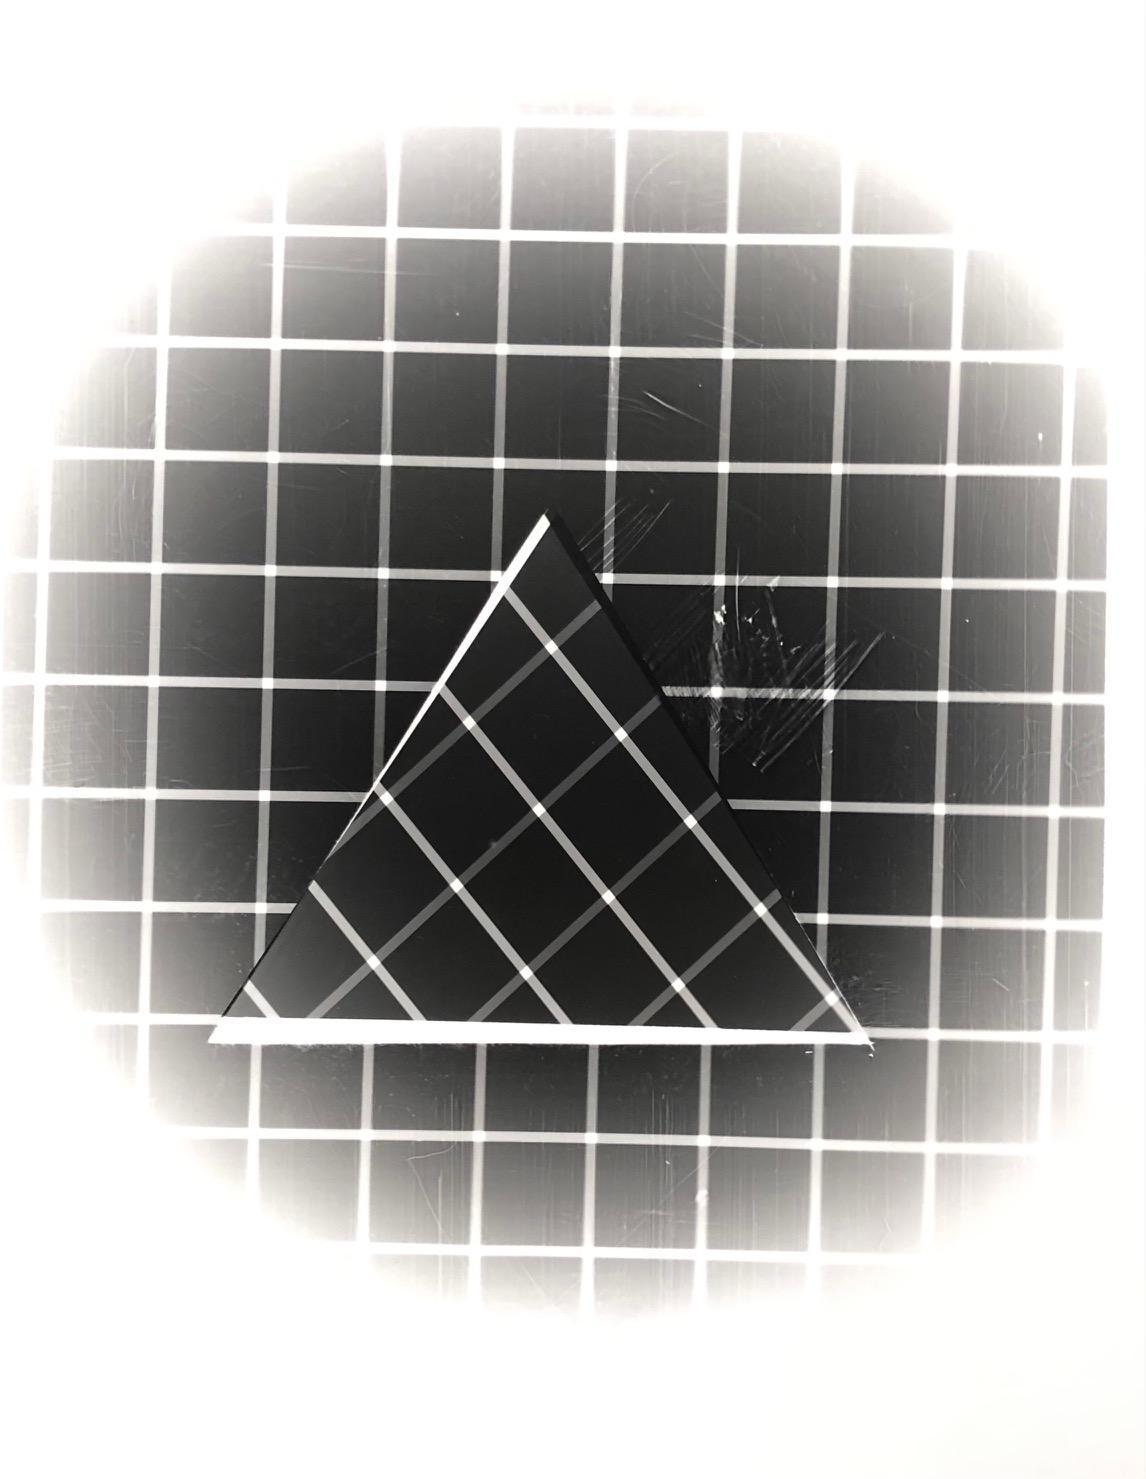 Juan Fernandez, Circle, Square, Triangle (Negative), 2022 , Laminated silver gelatin print mounted on masonite, 14” x 11” x 1”